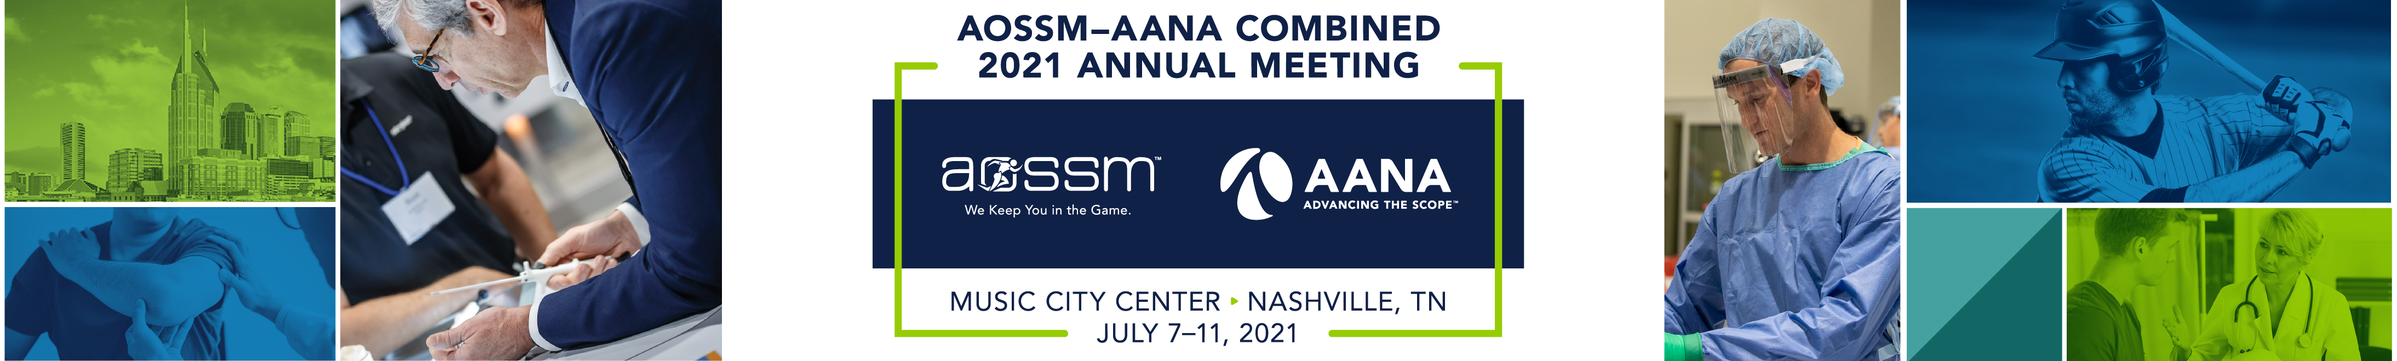 AOSSM-AANA Combined 2021 Annual Meeting